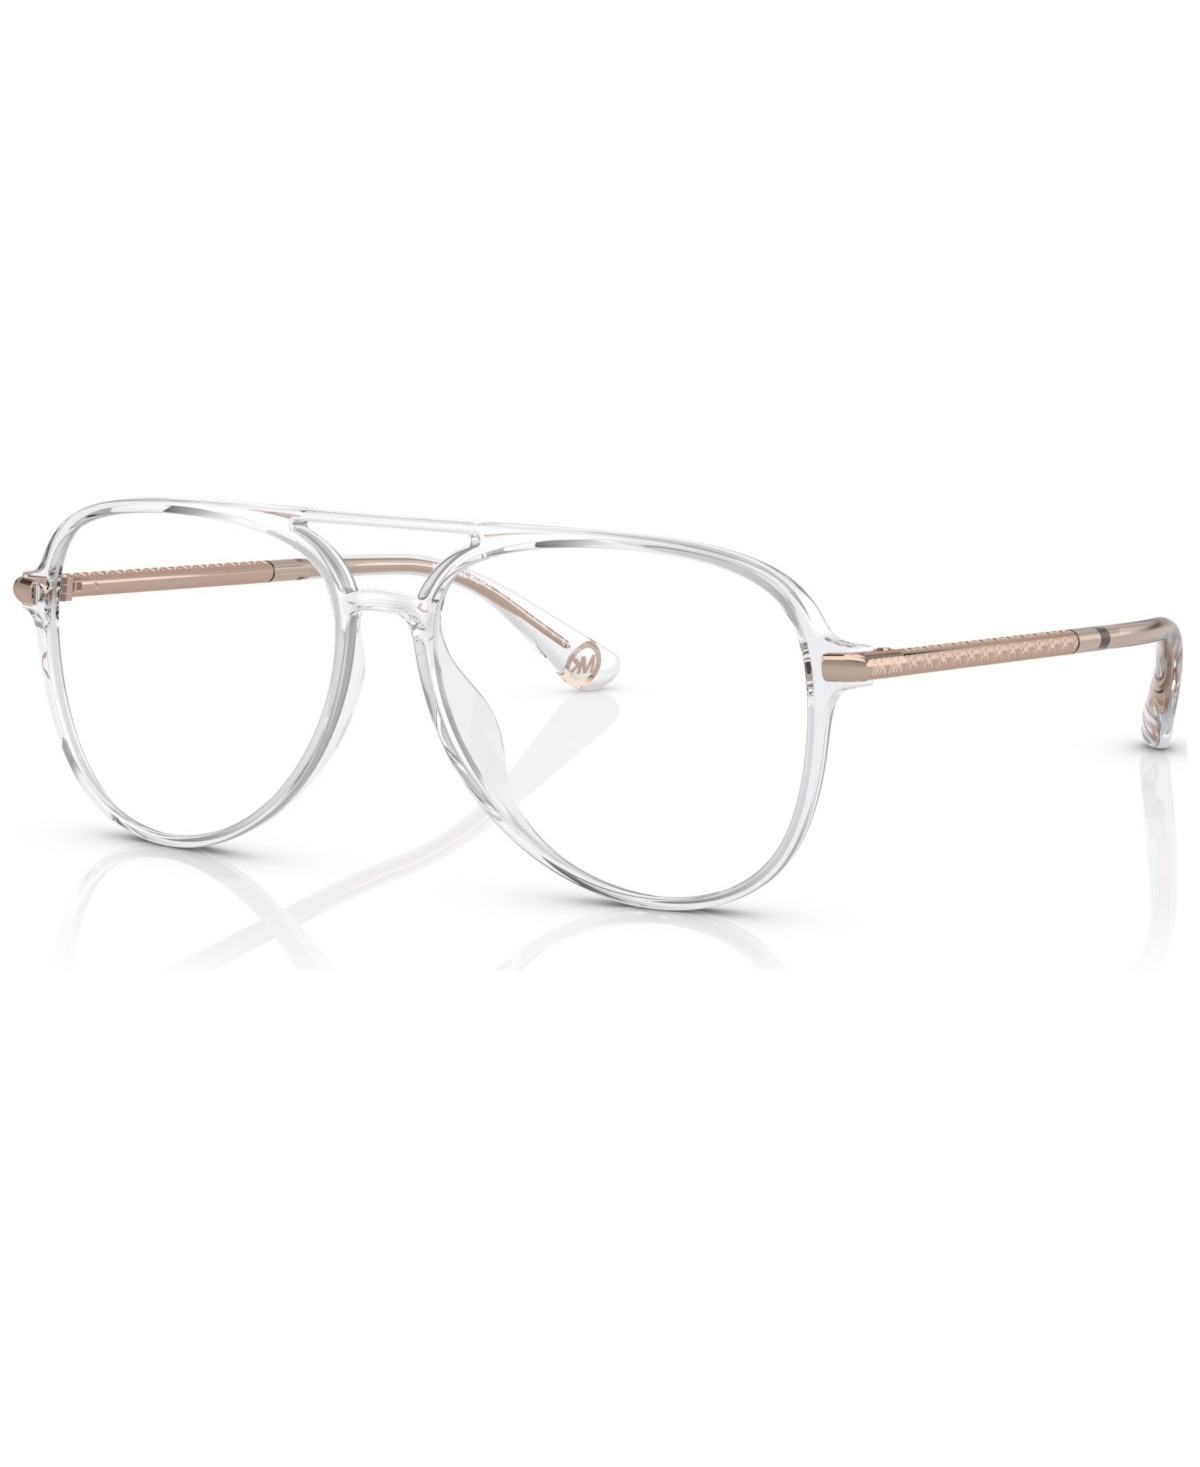 Women's Pilot Eyeglasses, MK4096U56-o - Clear Transparent